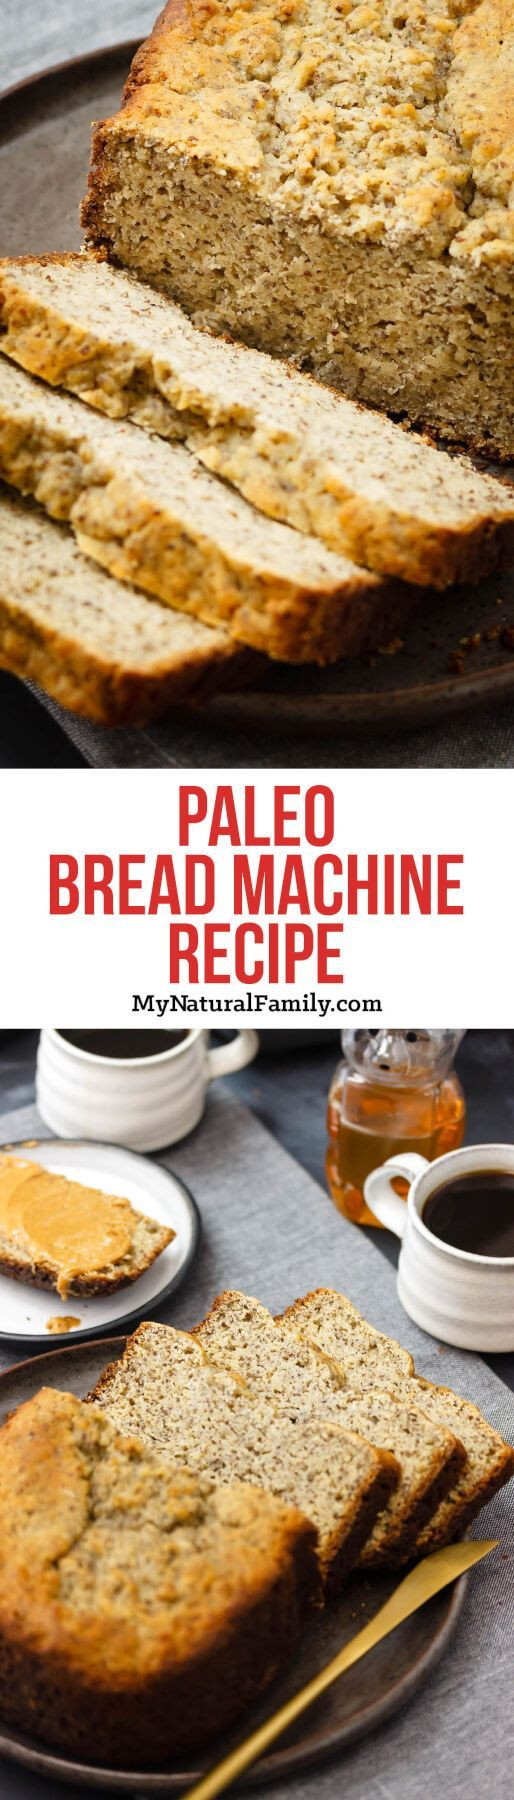 Paleo Bread Machine Recipe
 Paleo Bread Machine Recipe